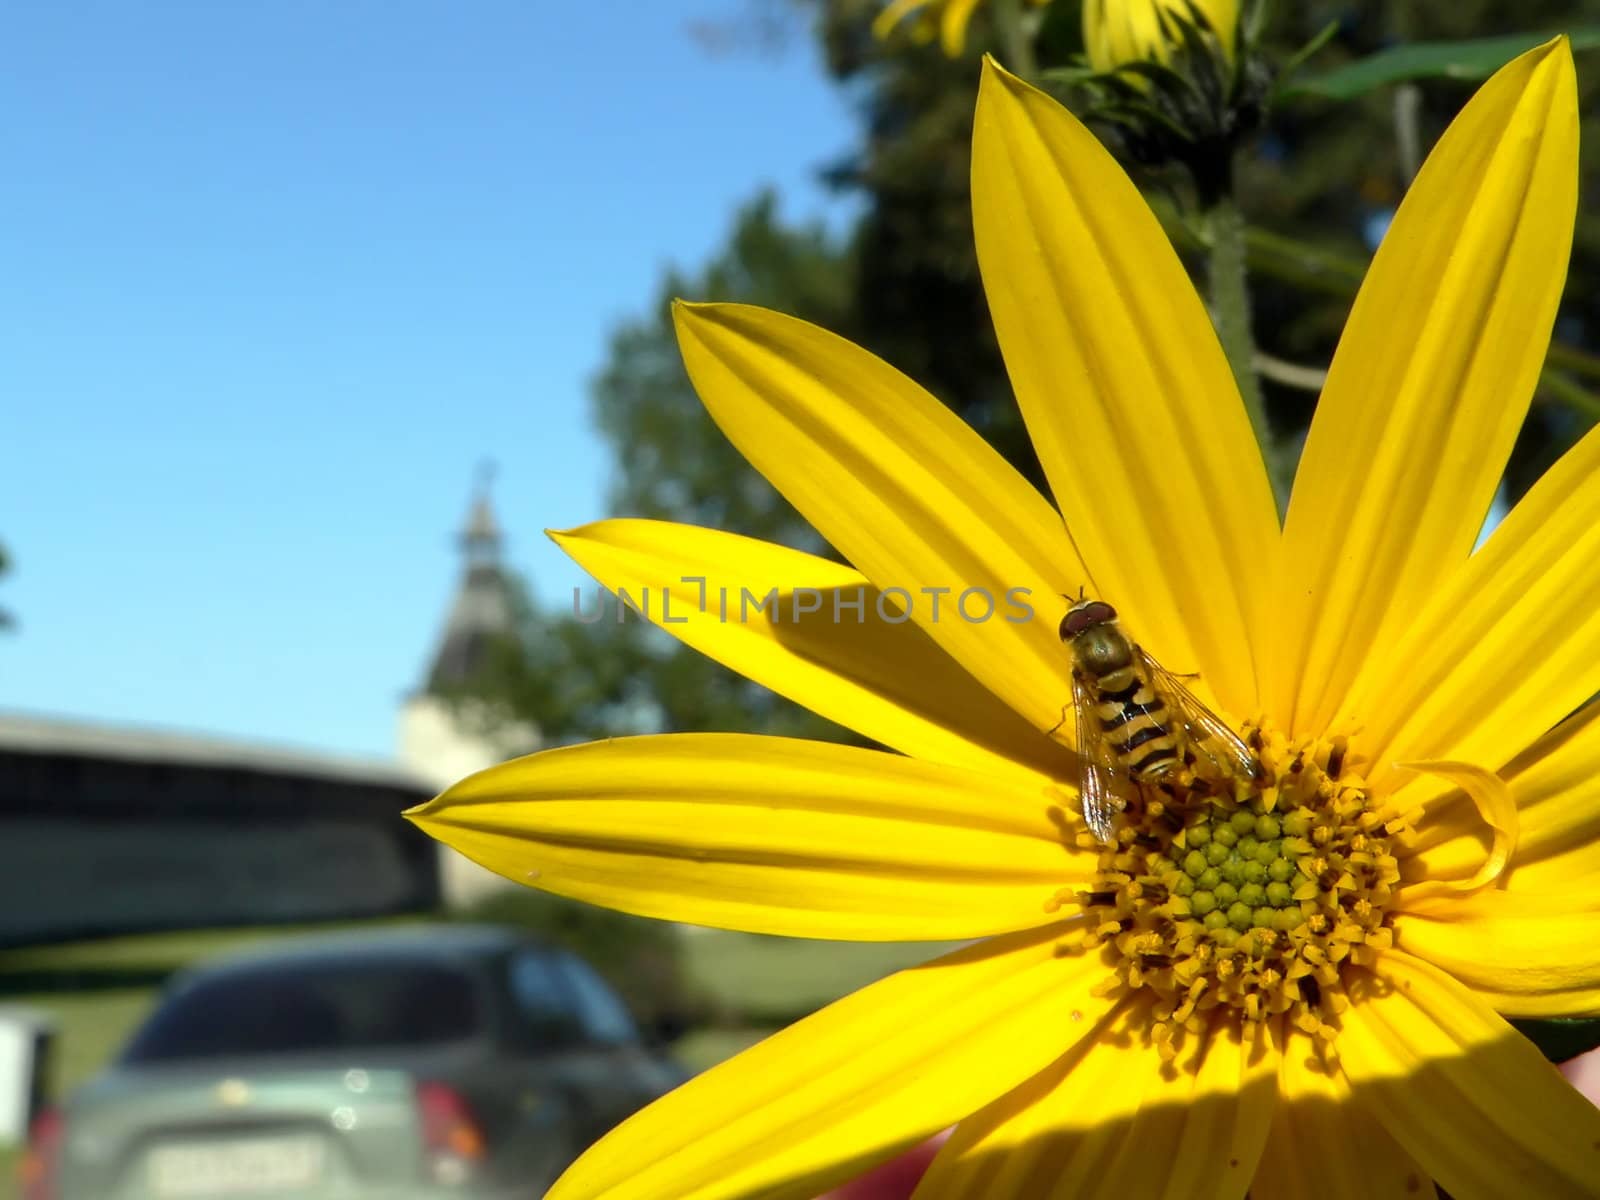 Bee on flower by ichip